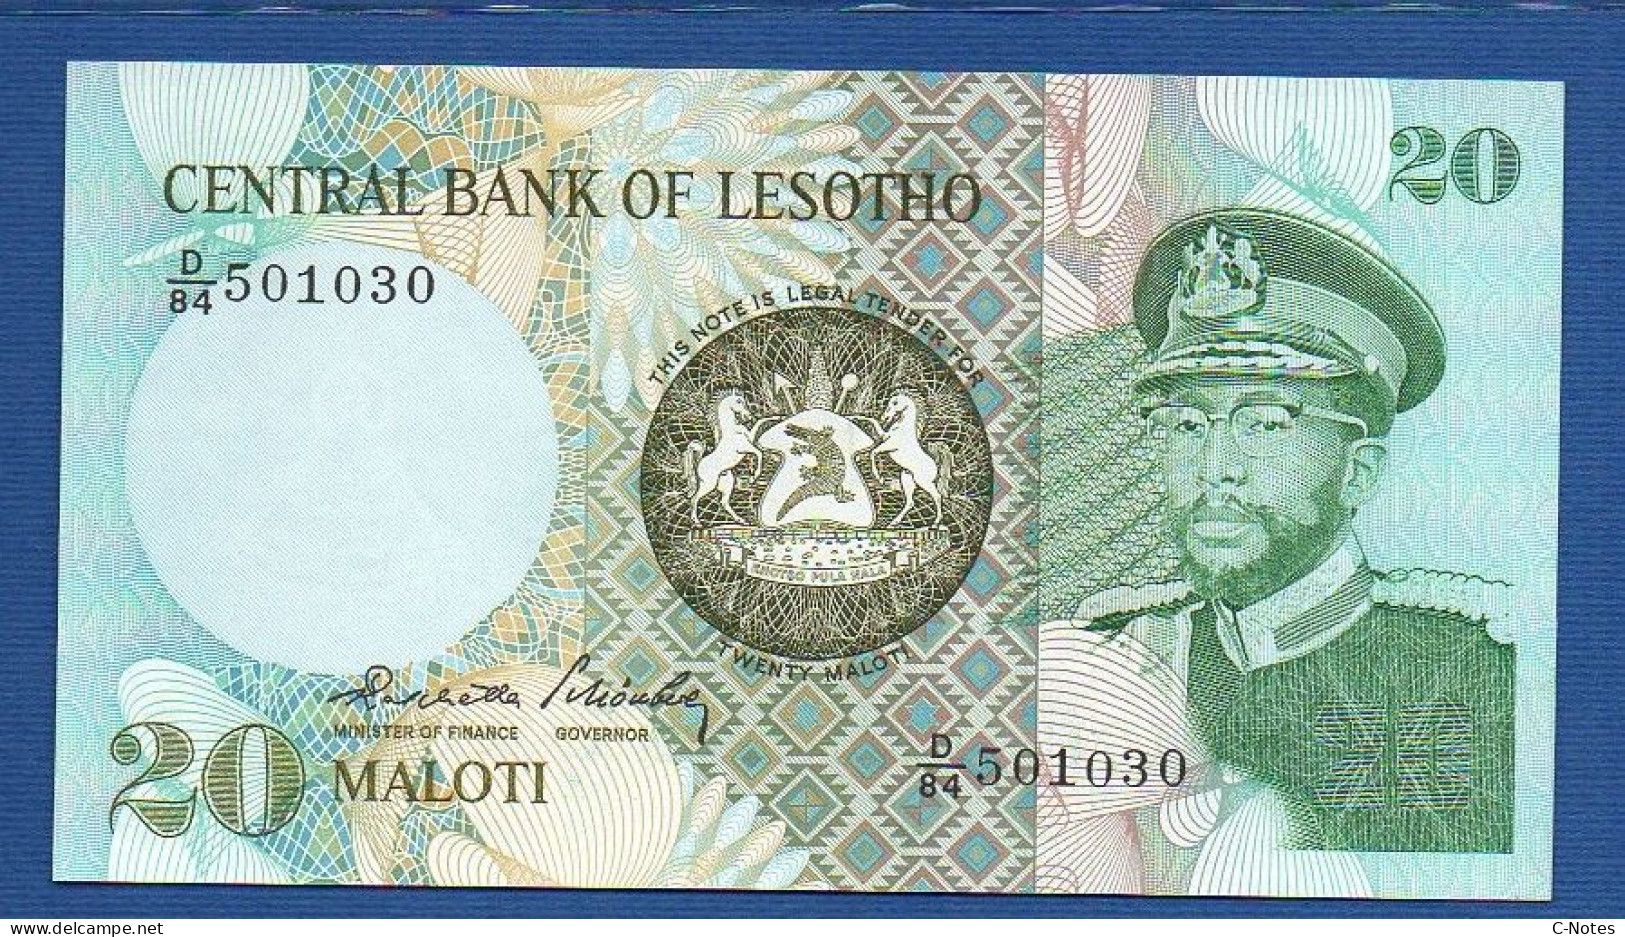 LESOTHO - P. 7b – 20 Maloti 1984 AUNC, S/n D/84 501030 - Lesotho